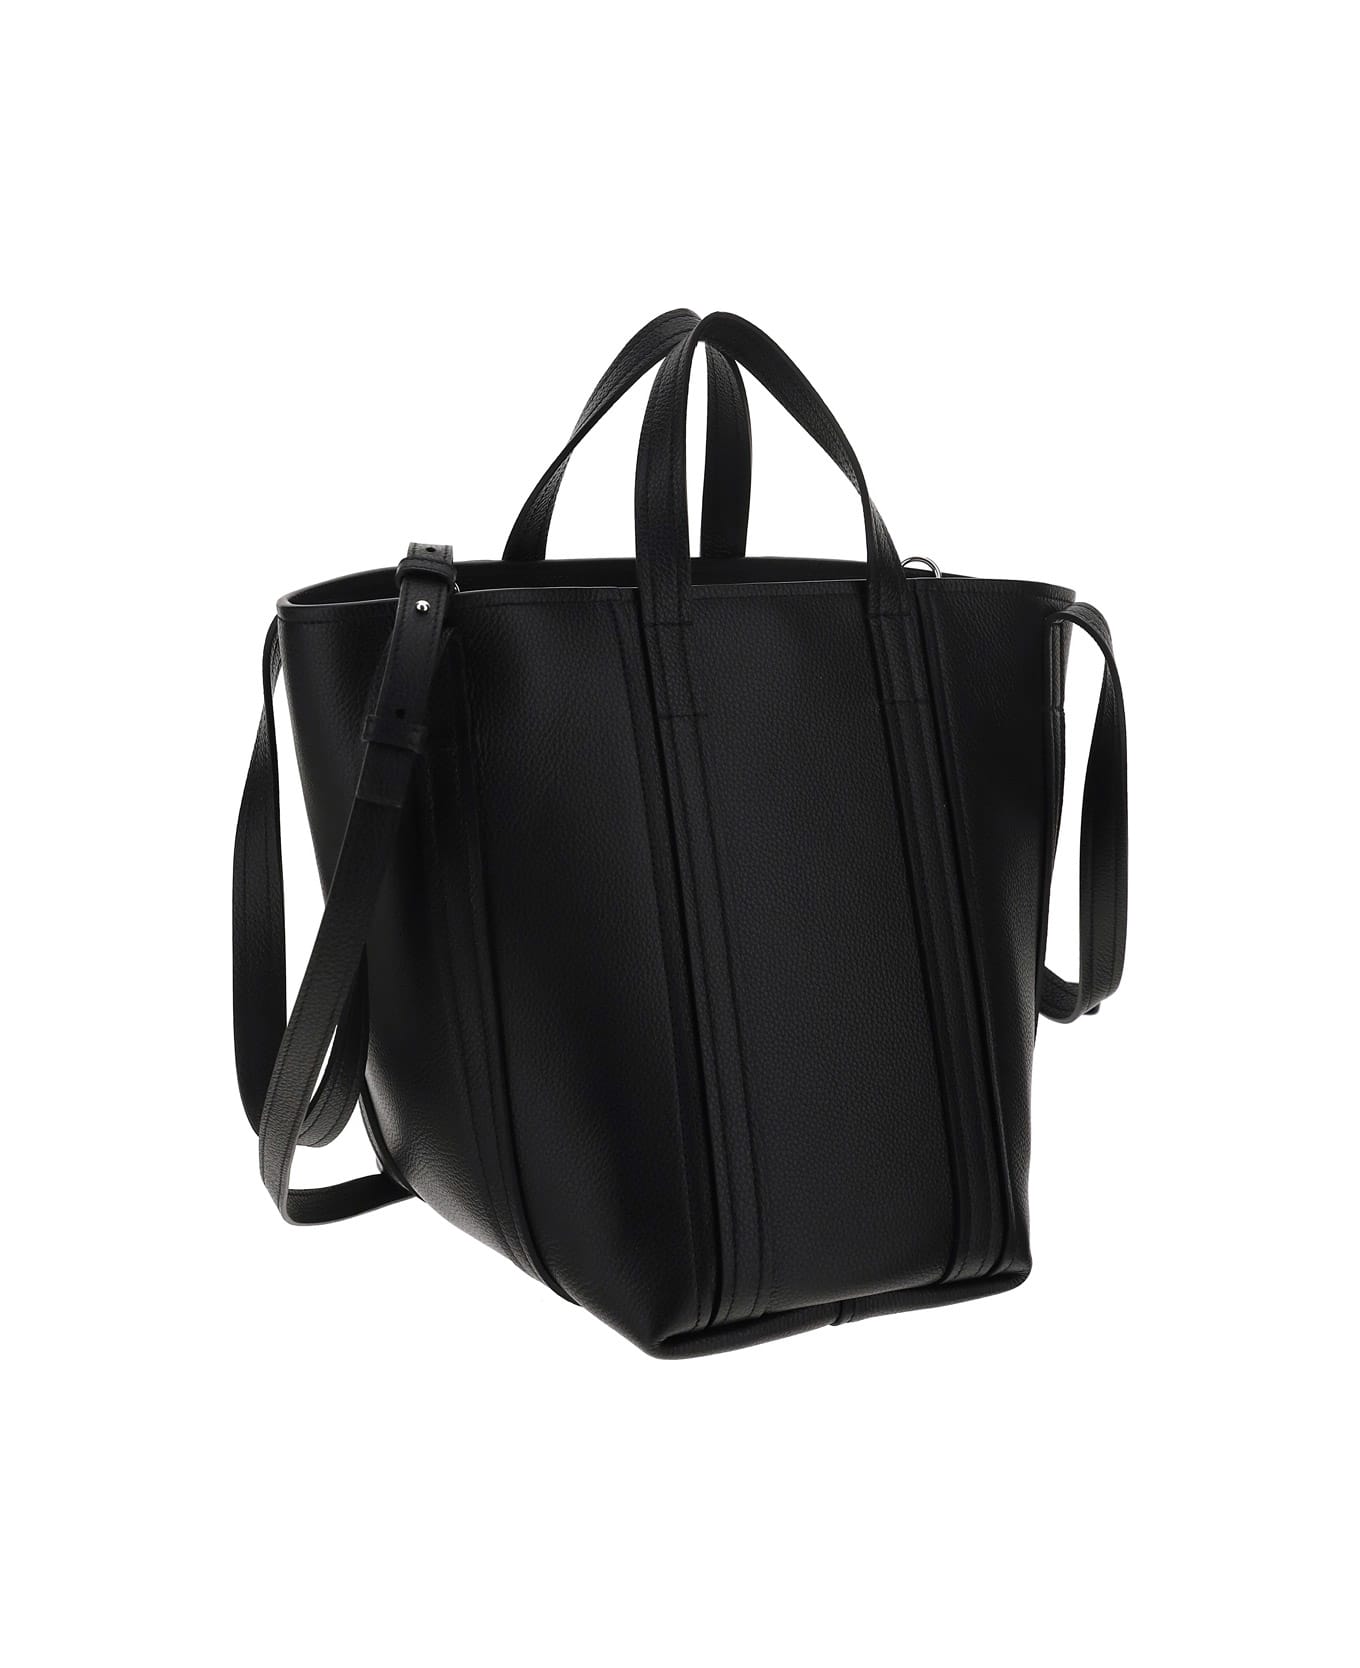 Balenciaga Everyday Handbag - Black/l White